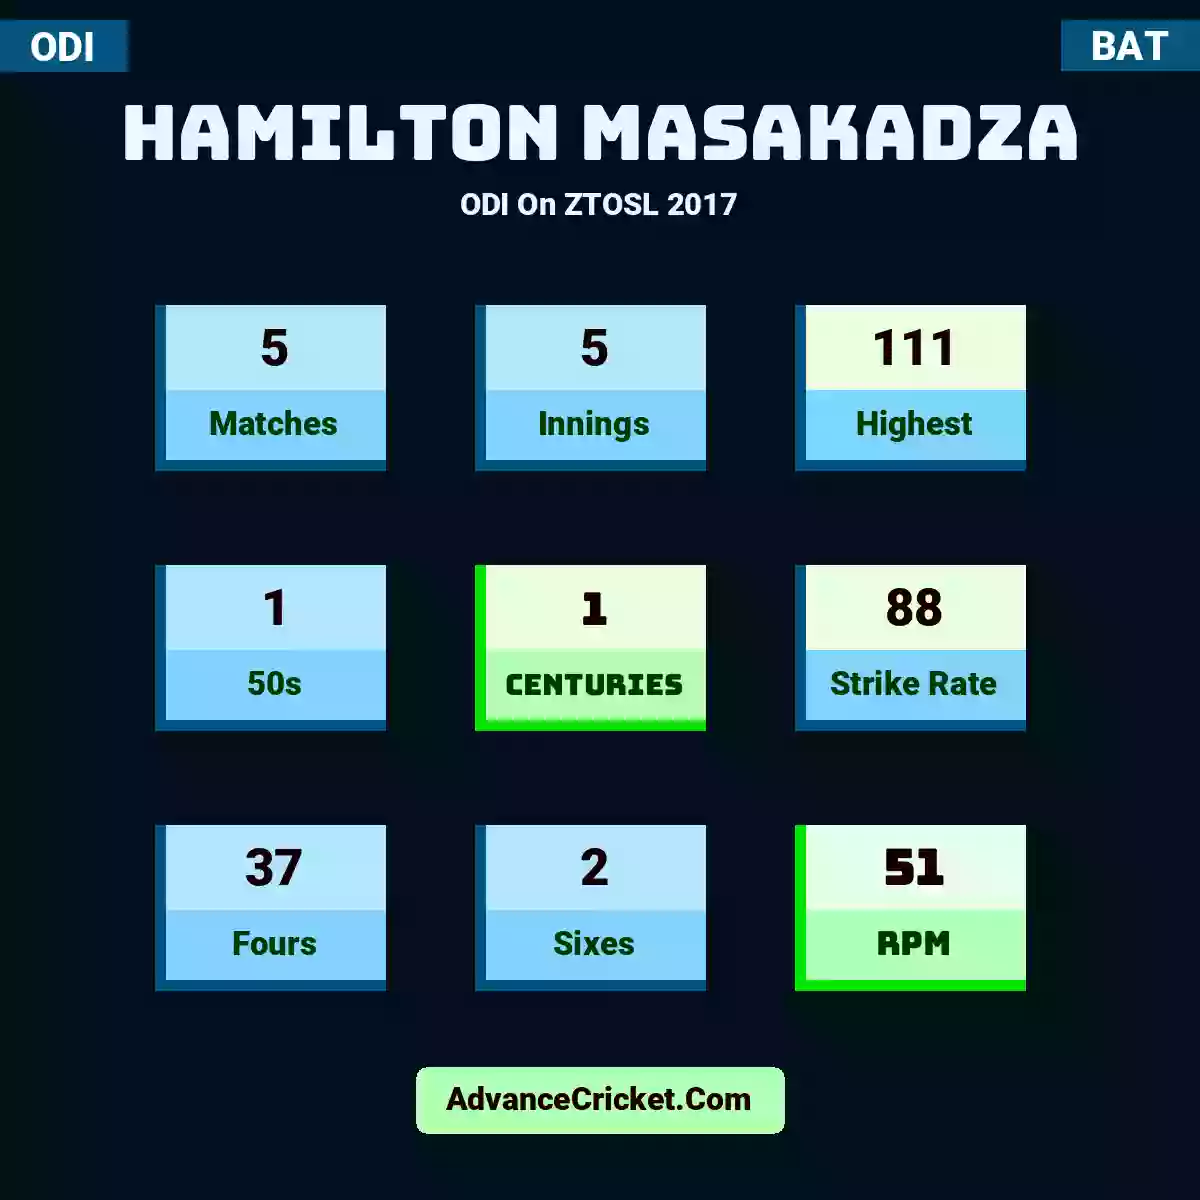 Hamilton Masakadza ODI  On ZTOSL 2017, Hamilton Masakadza played 5 matches, scored 111 runs as highest, 1 half-centuries, and 1 centuries, with a strike rate of 88. H.Masakadza hit 37 fours and 2 sixes, with an RPM of 51.